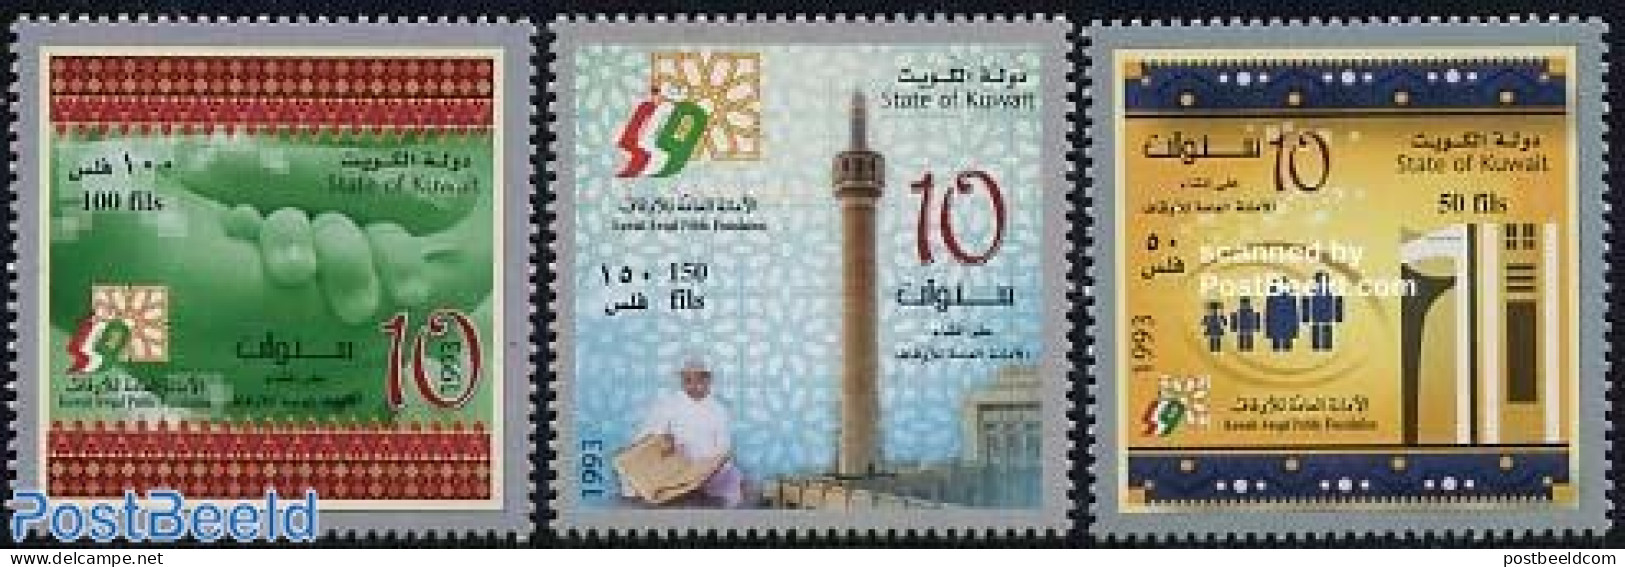 Kuwait 2004 Awqaf Public Foundation 3v, Mint NH - Kuwait